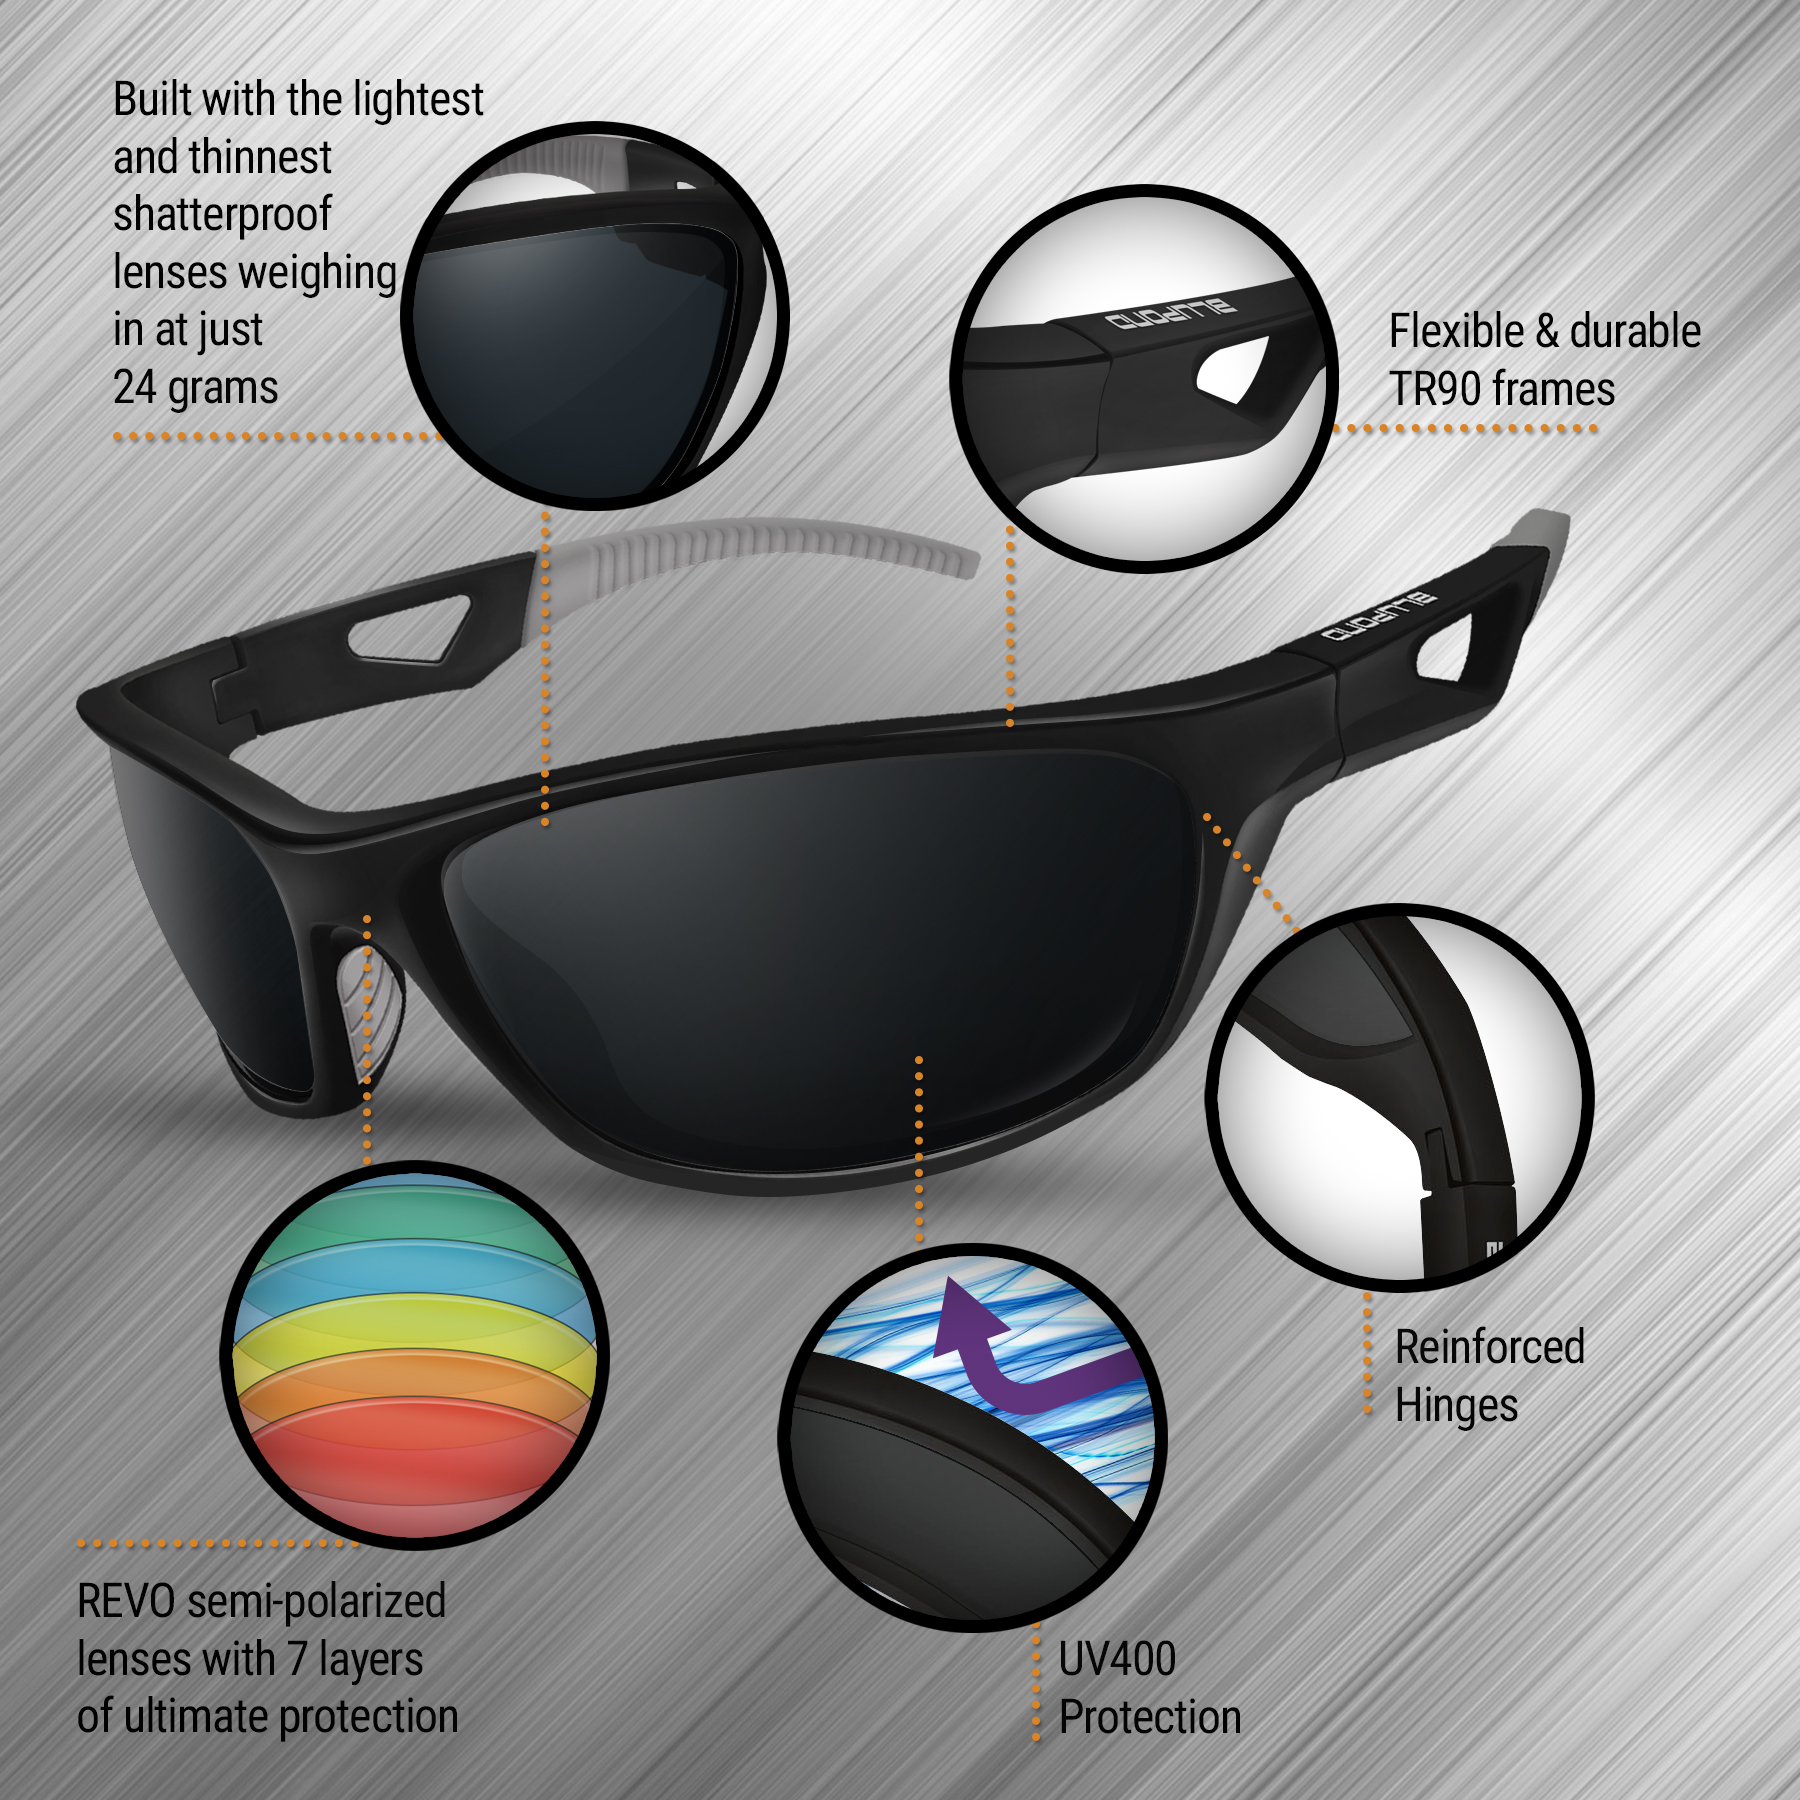 Car Visor Sunglasses Clip Holder - Knight Visor - BLUPOND - EXPAND YOUR  LIMITS